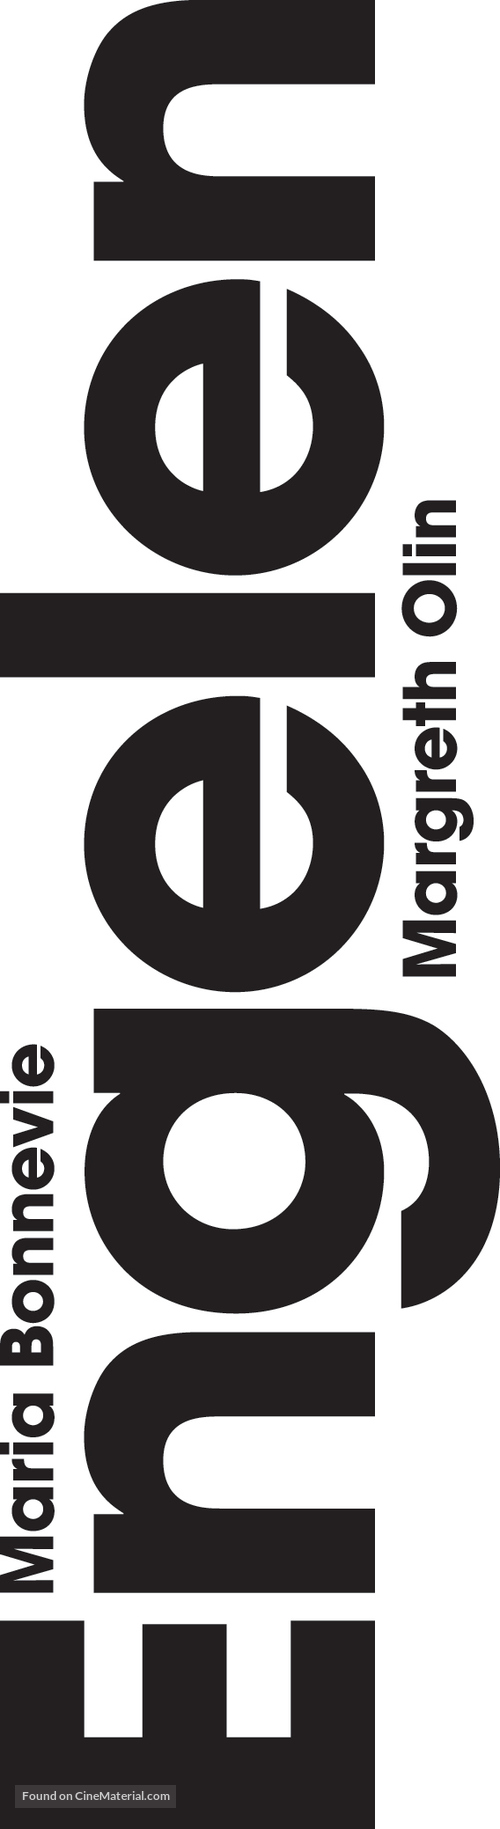 Engelen - Norwegian Logo